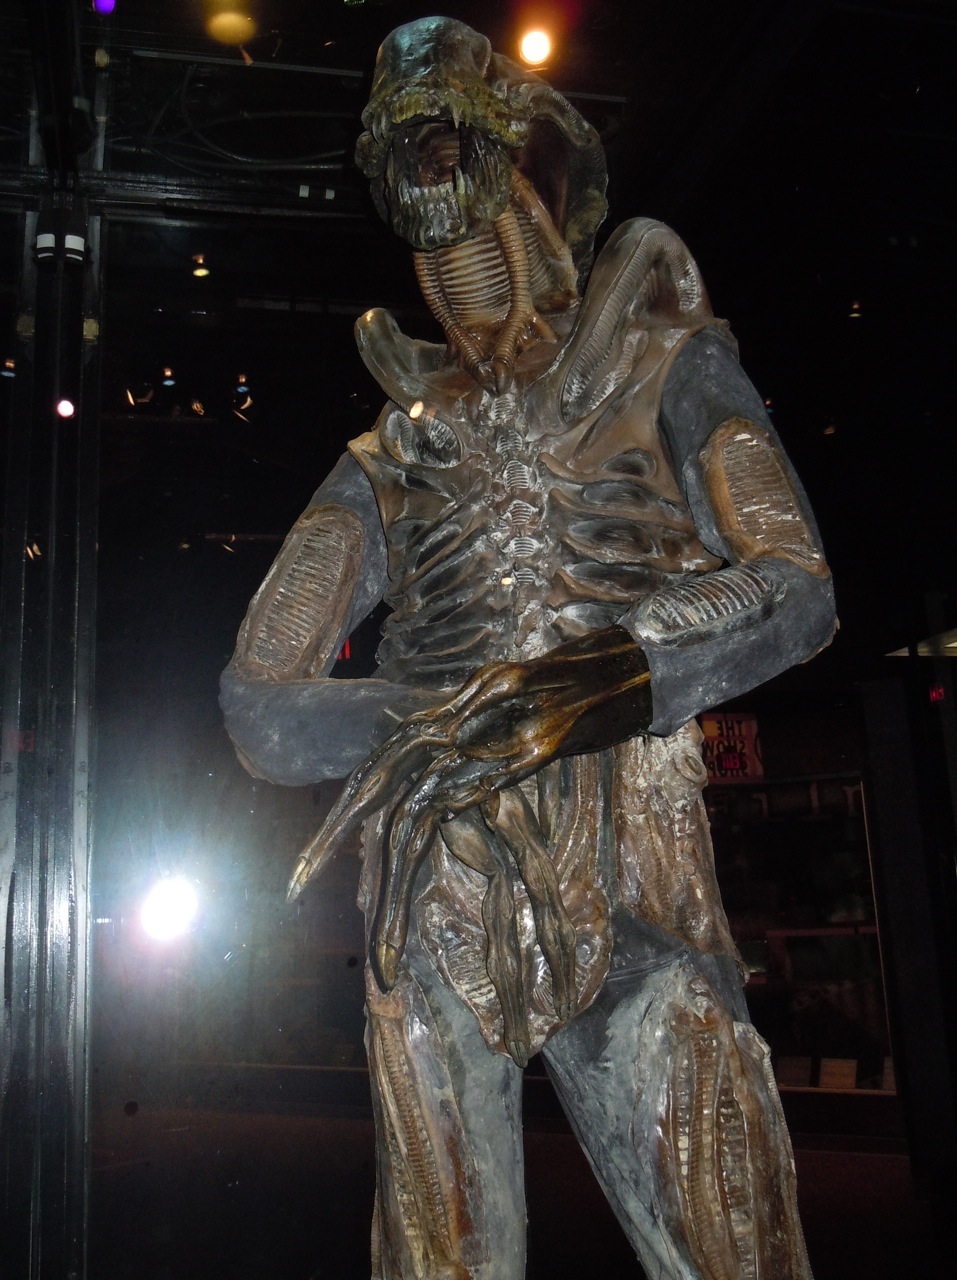 Alien movie costume from James Cameron's Aliens. 